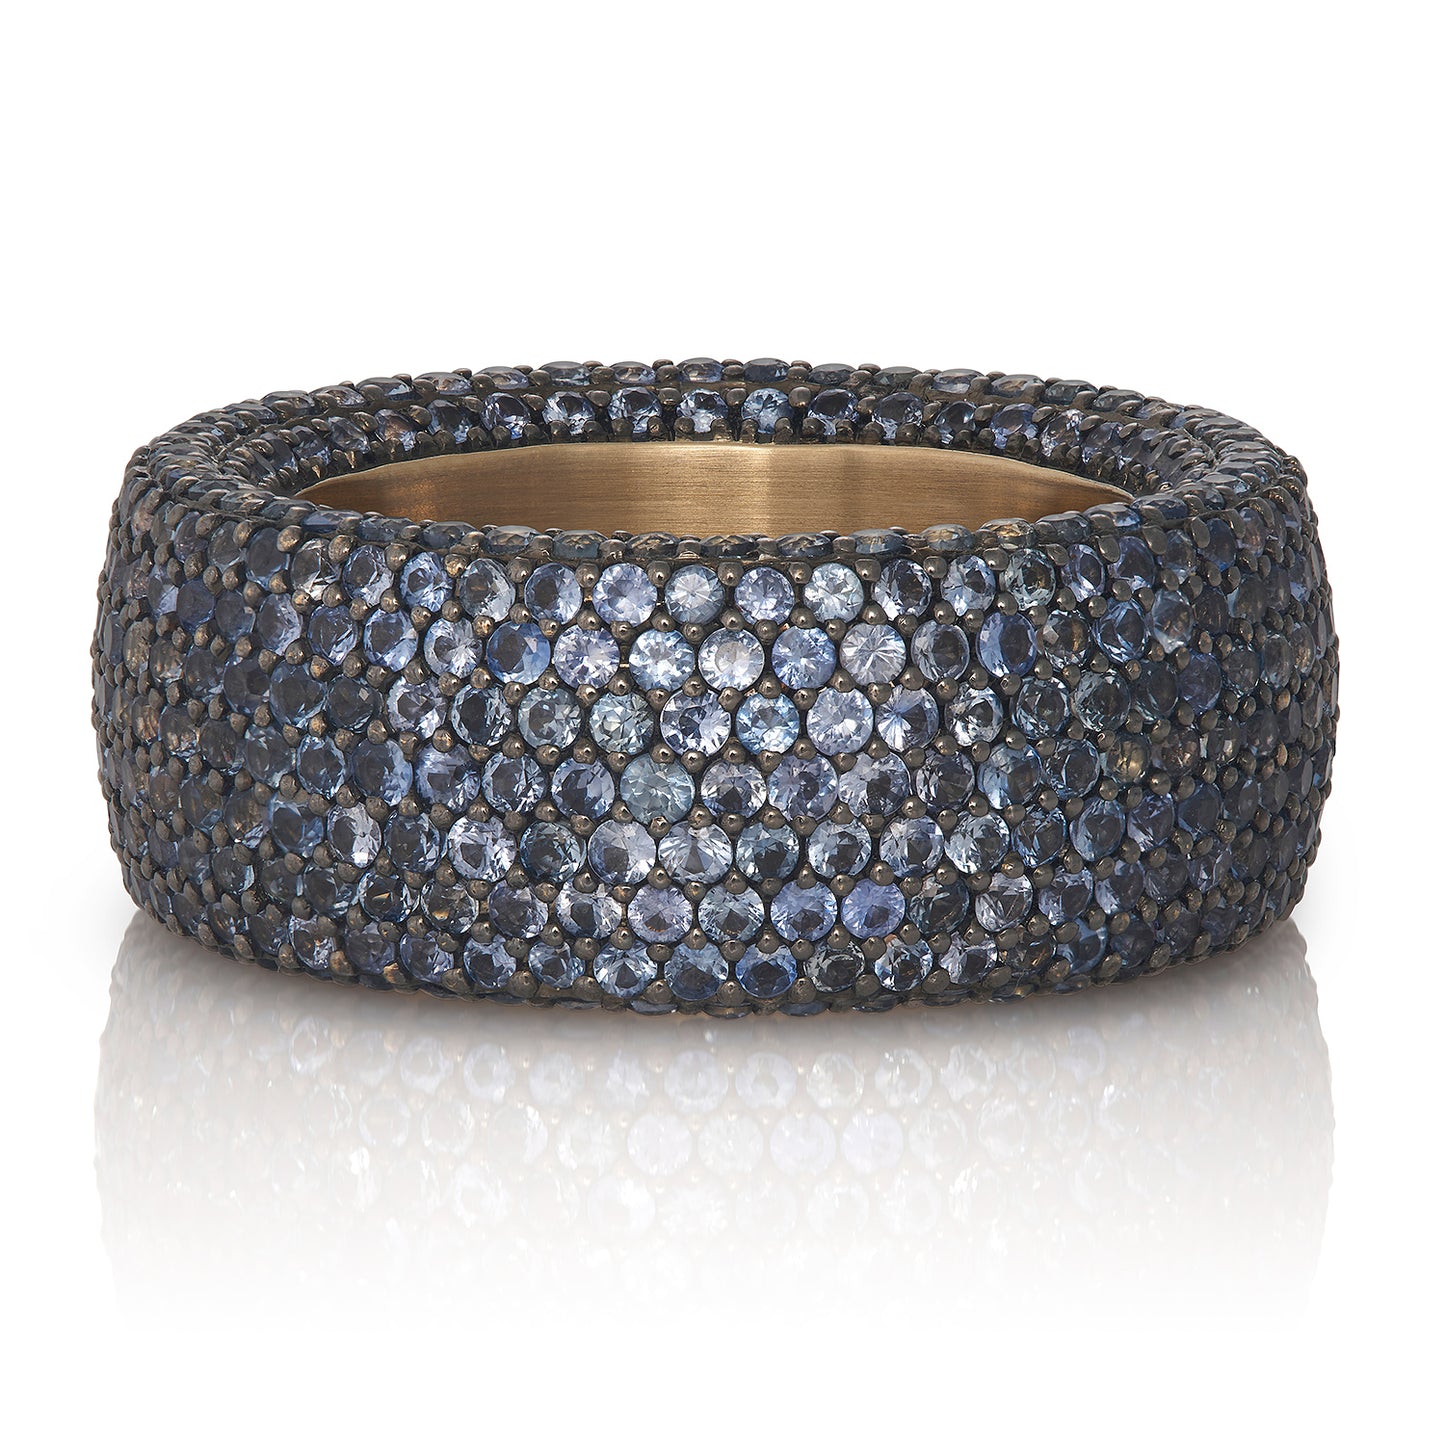 Light Blue Sapphire Pavé Ring